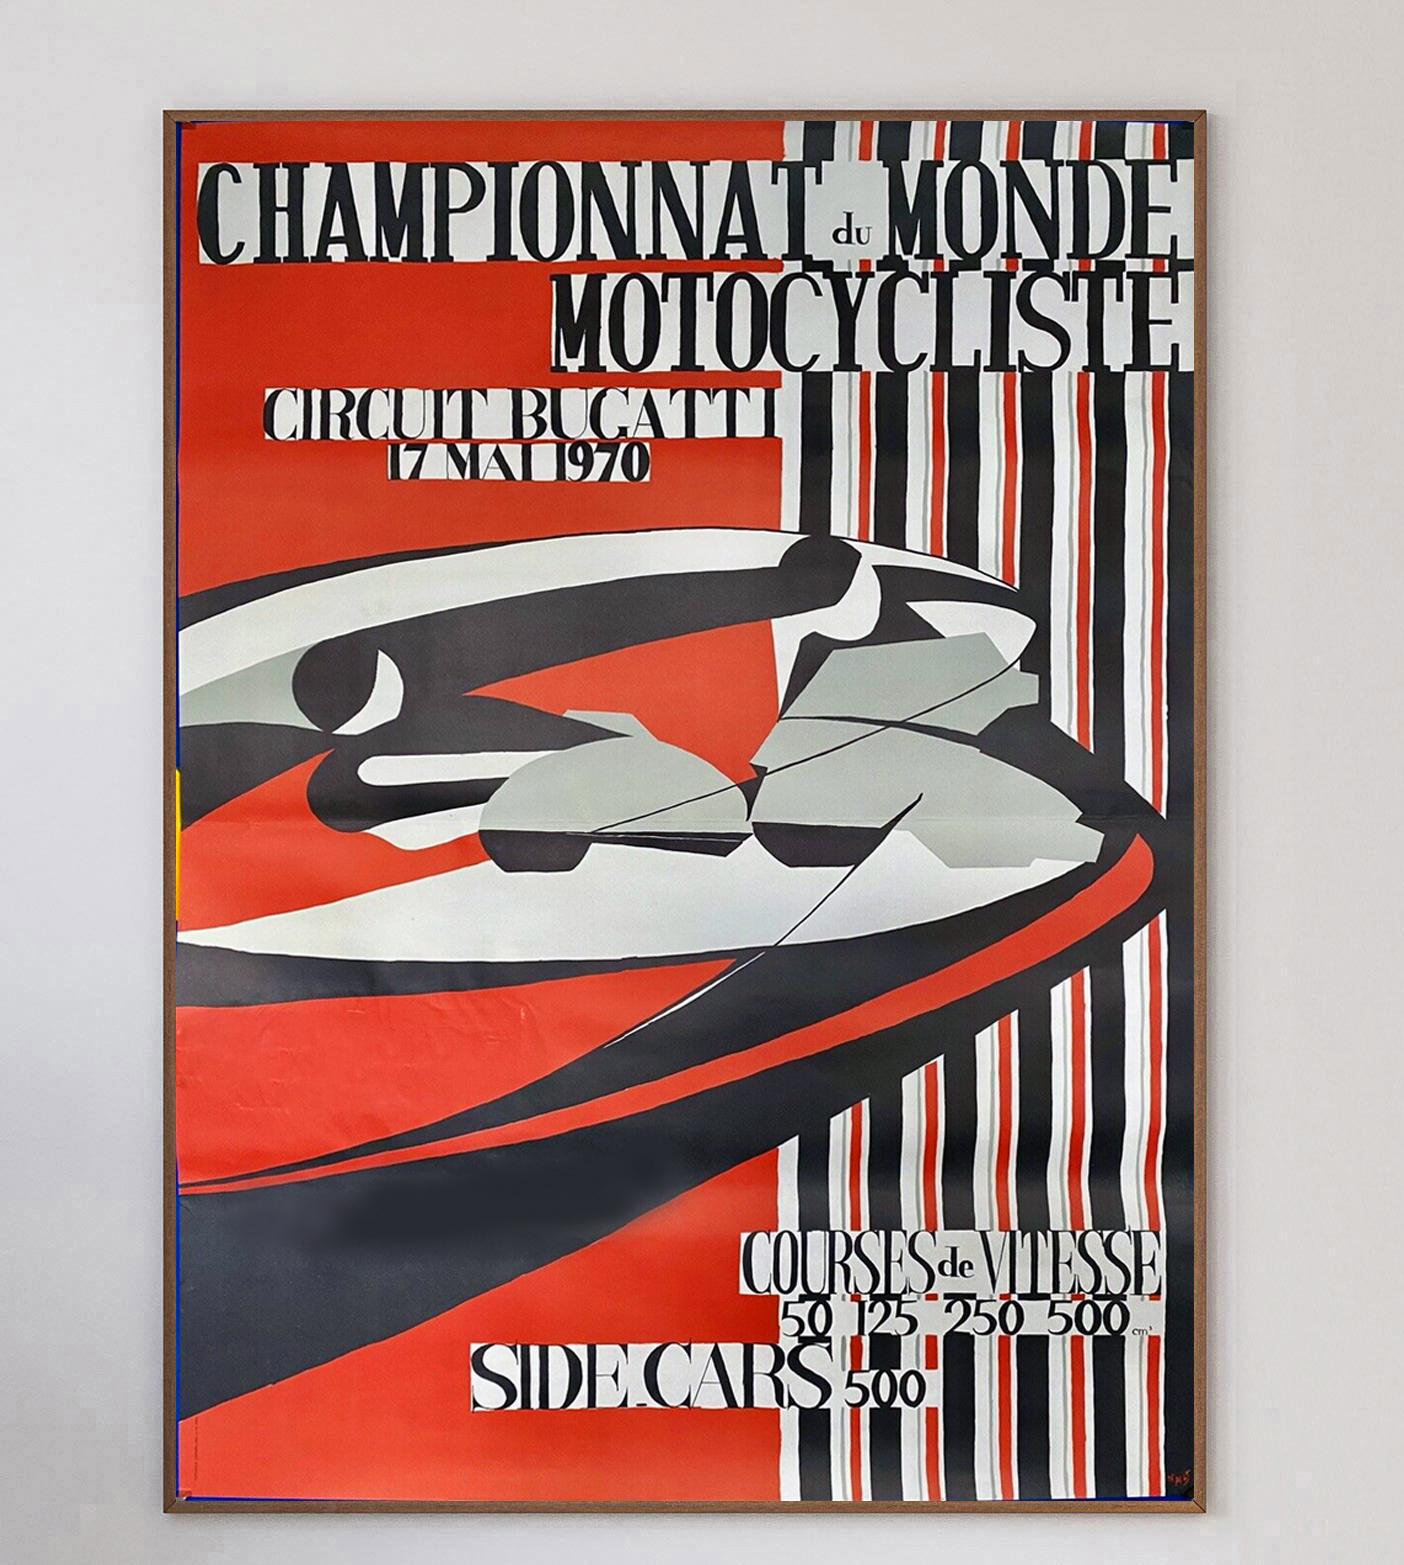 Beautifully designed poster for the Championnat de Monde Motocycliste Circuit Bugatti, or Bugatti Circuit Motorcycle World Championship in 1970. The Bugatti Circuit is a part of the Circuit de la Sarthe - Le Mans 24 Hours. Giacomo Agostini won the